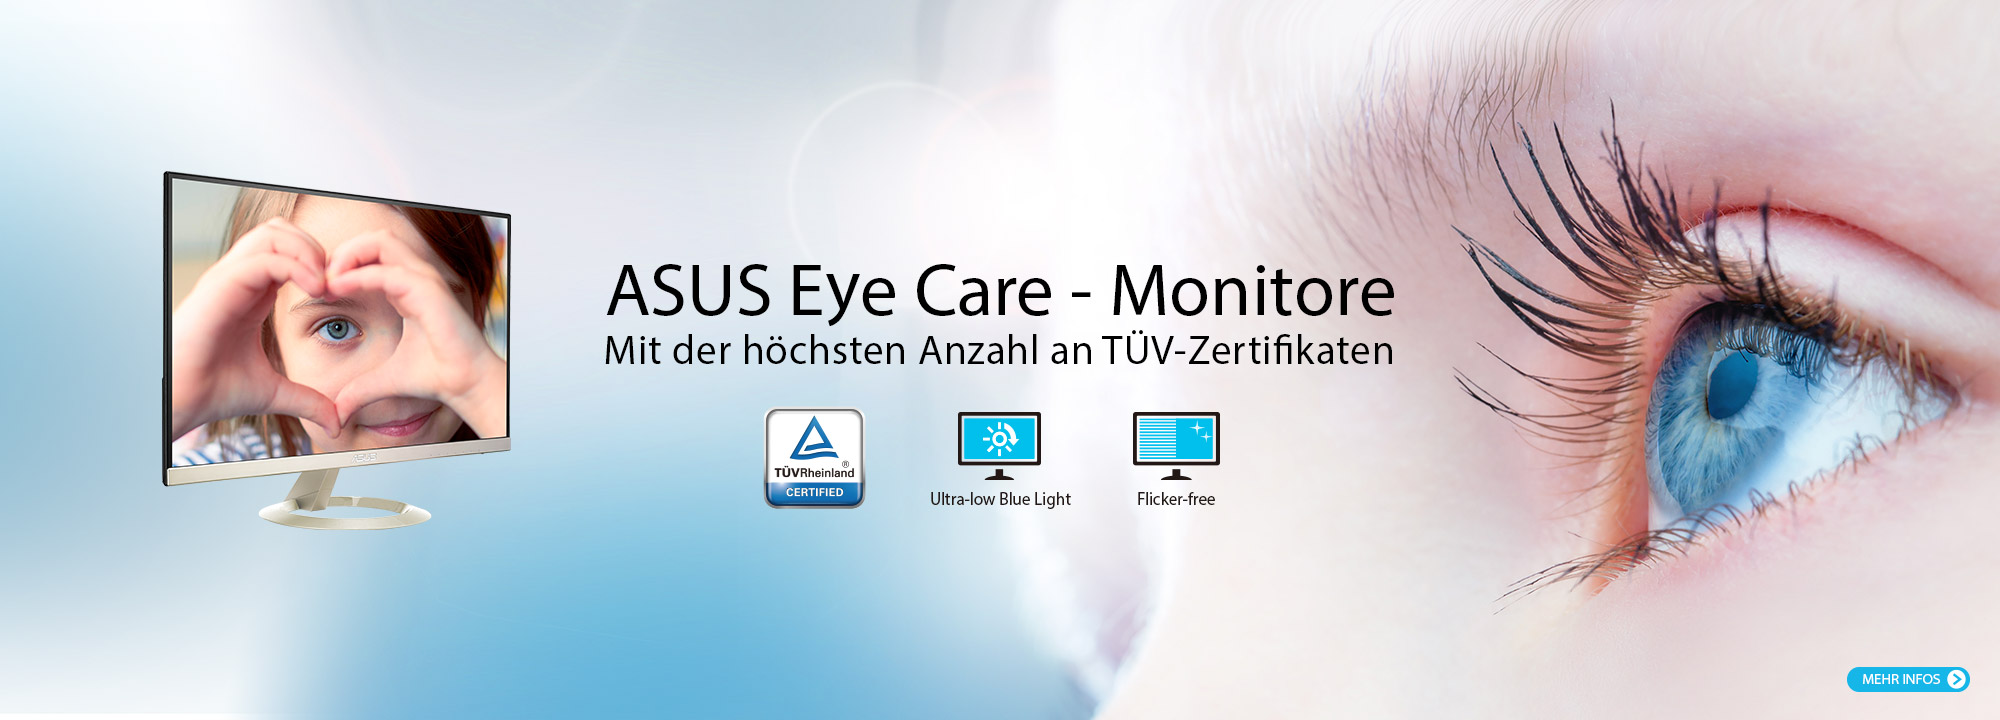 ASUS Eye Care Technologie